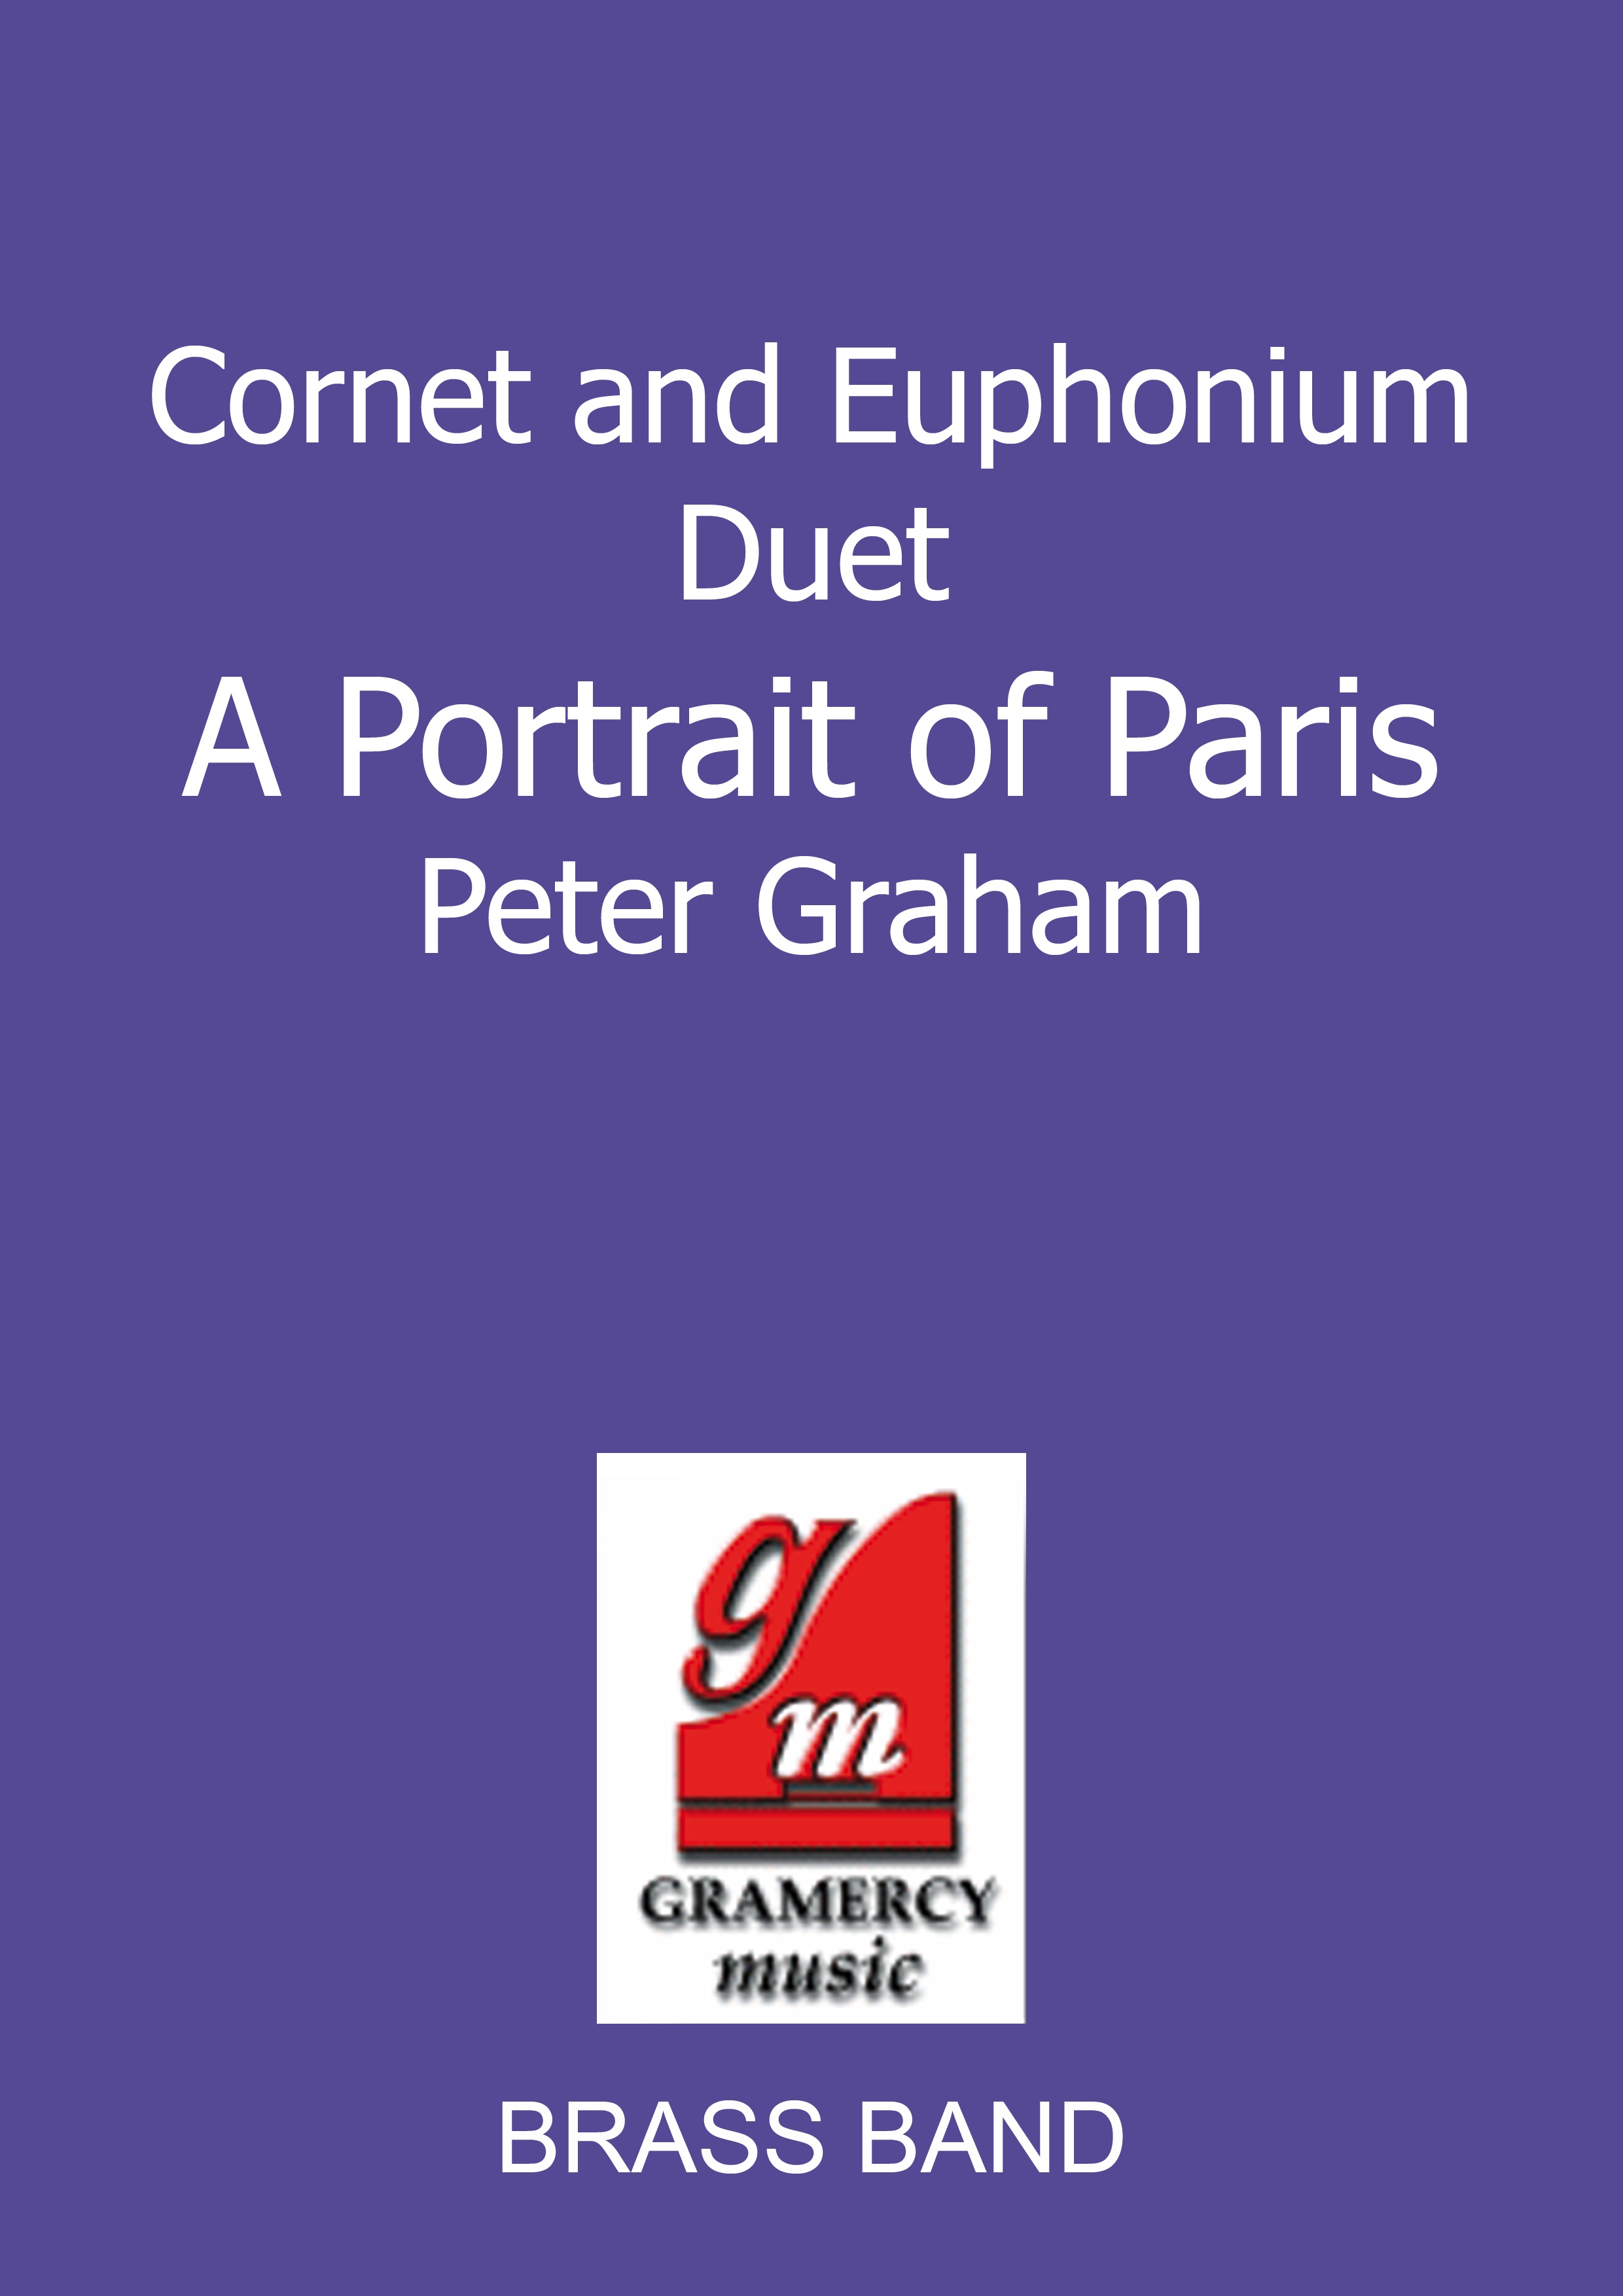 A Portrait of Paris (Cornet and Euphonium Duet with Brass Band)